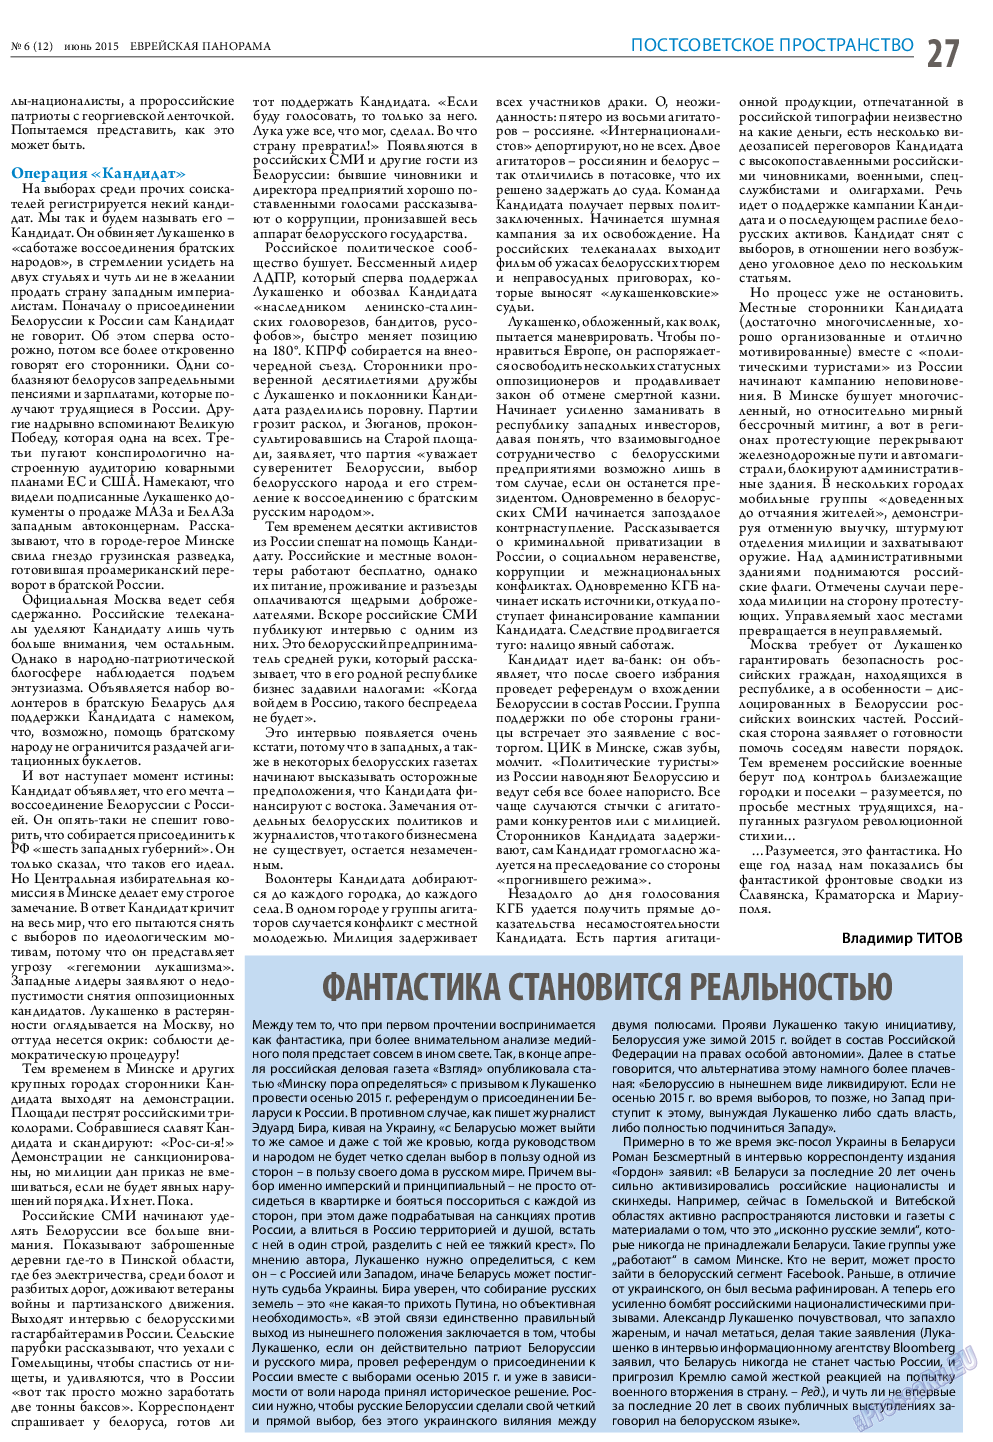 Еврейская панорама, газета. 2015 №6 стр.27